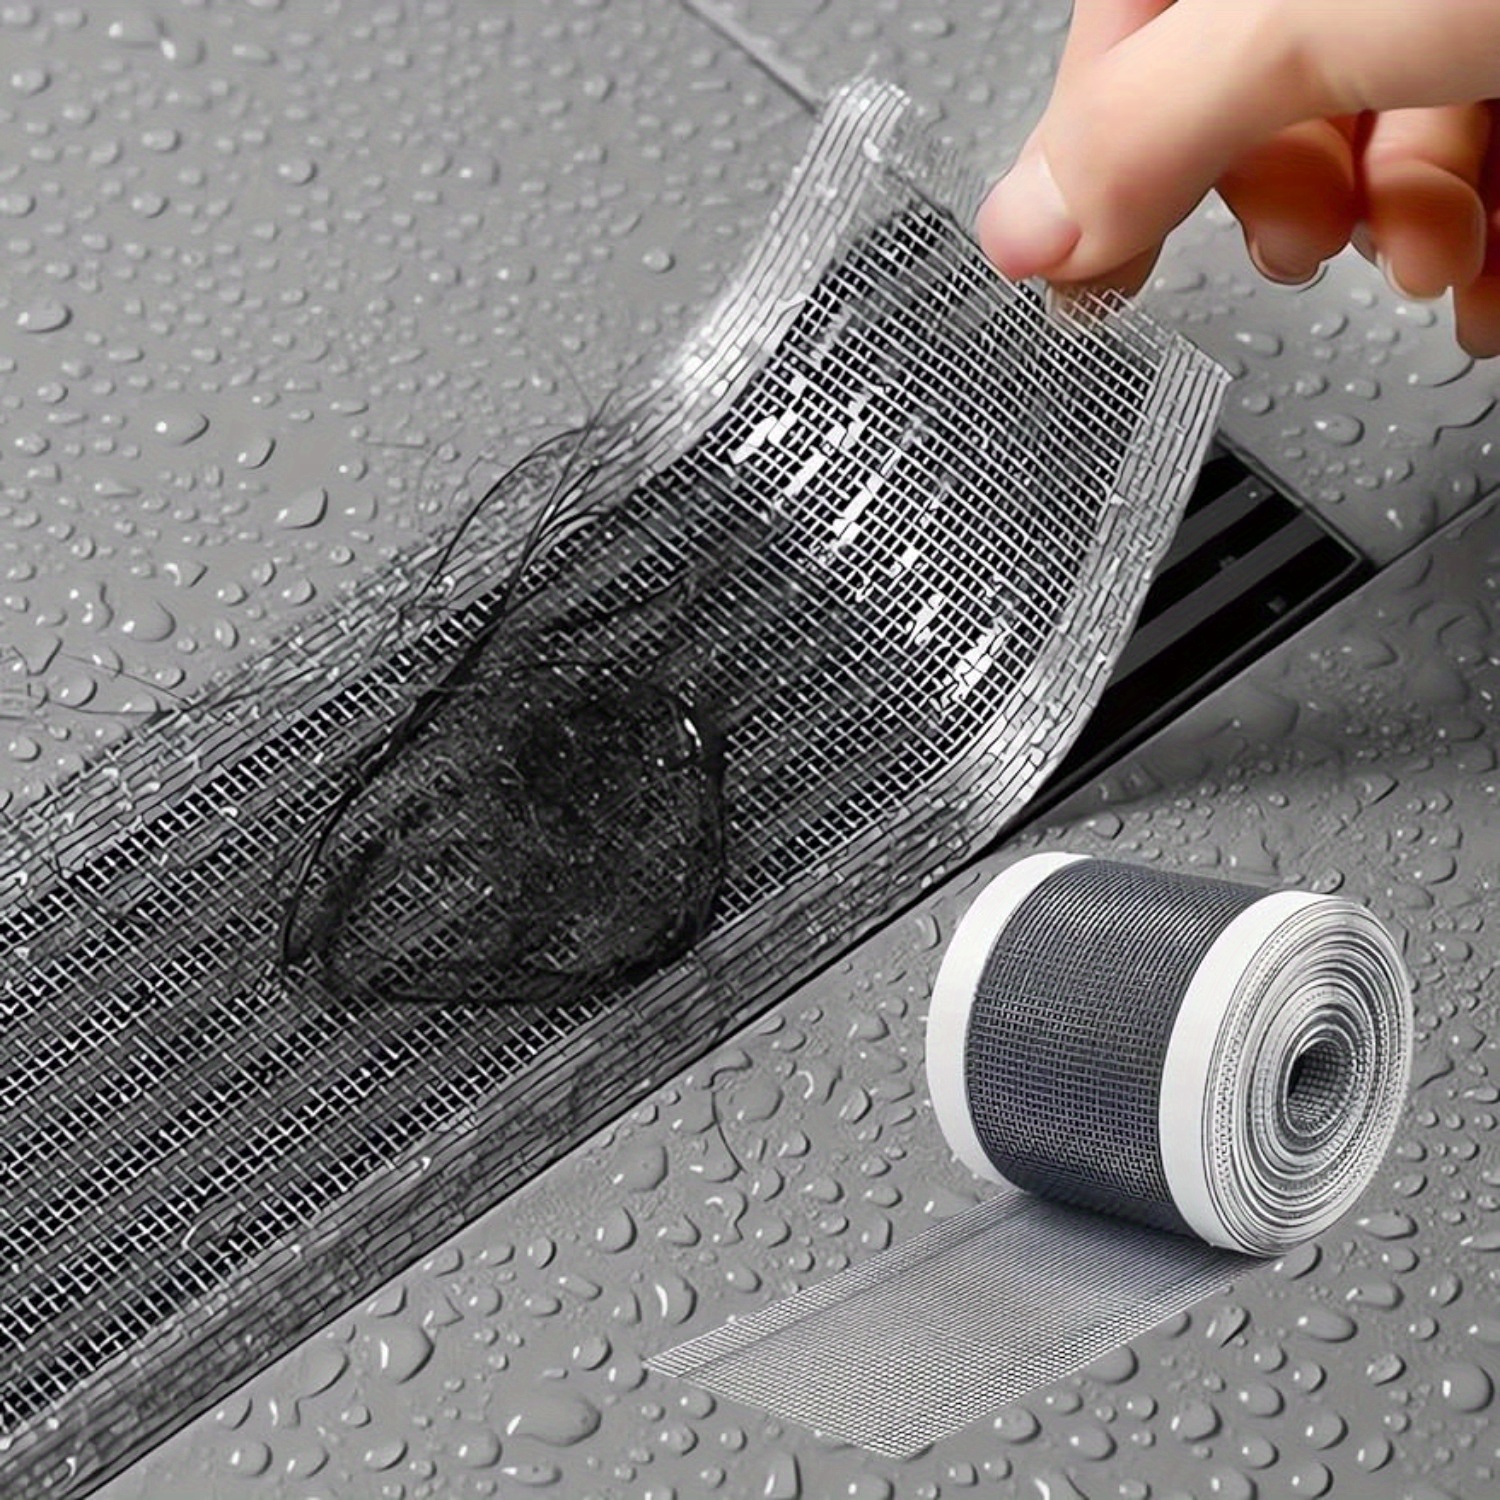 30pcs Household Drain Filter Sticker Self-adhesive Floor Drain